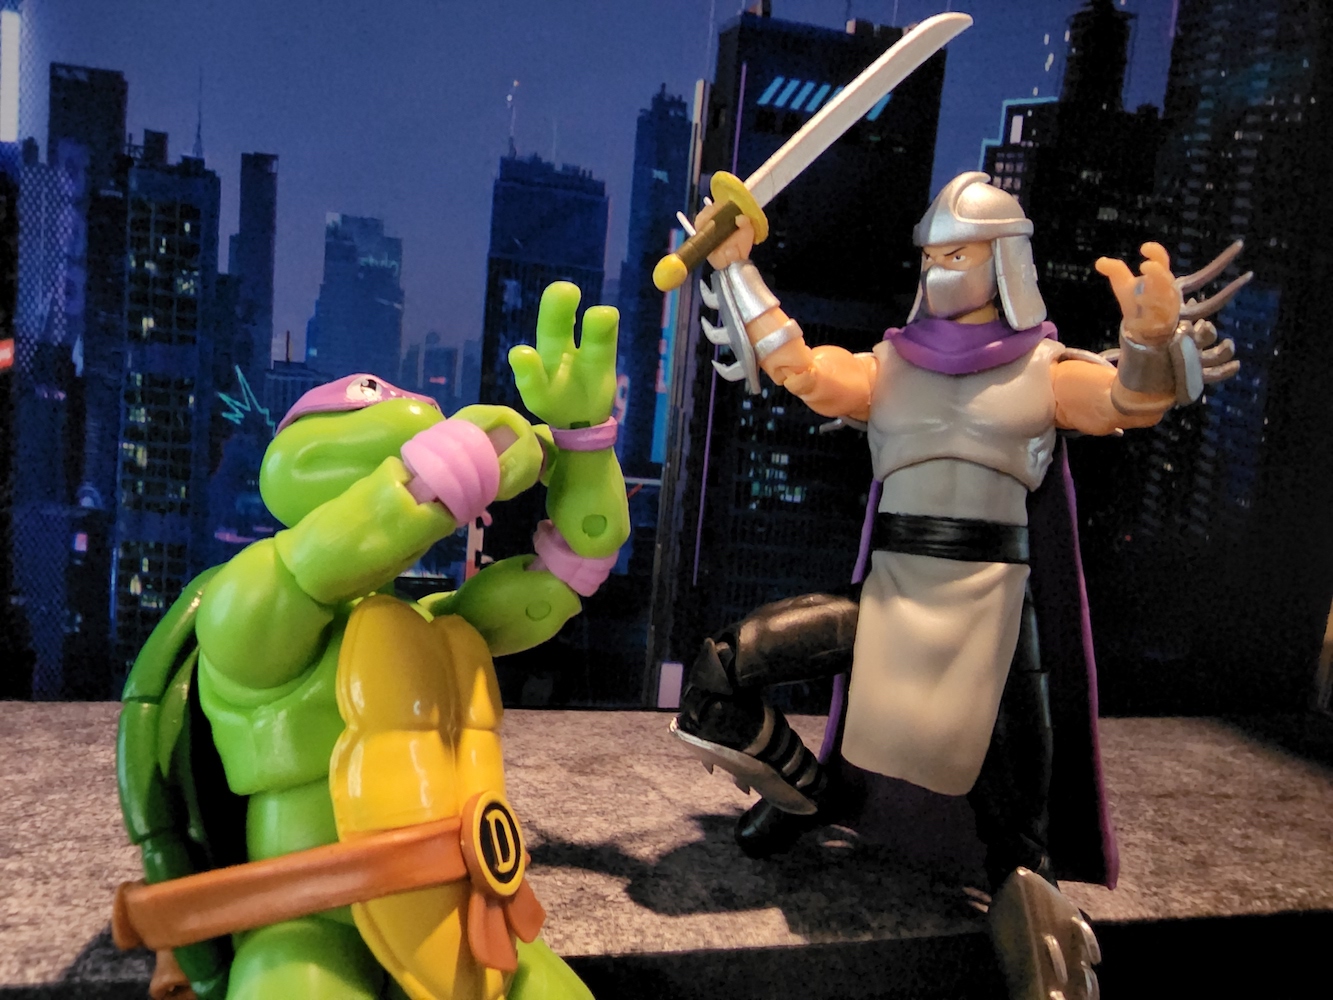 Teenage Mutant Ninja Turtles - Shredder BST AXN 5 Action Figure – The  Loyal Subjects